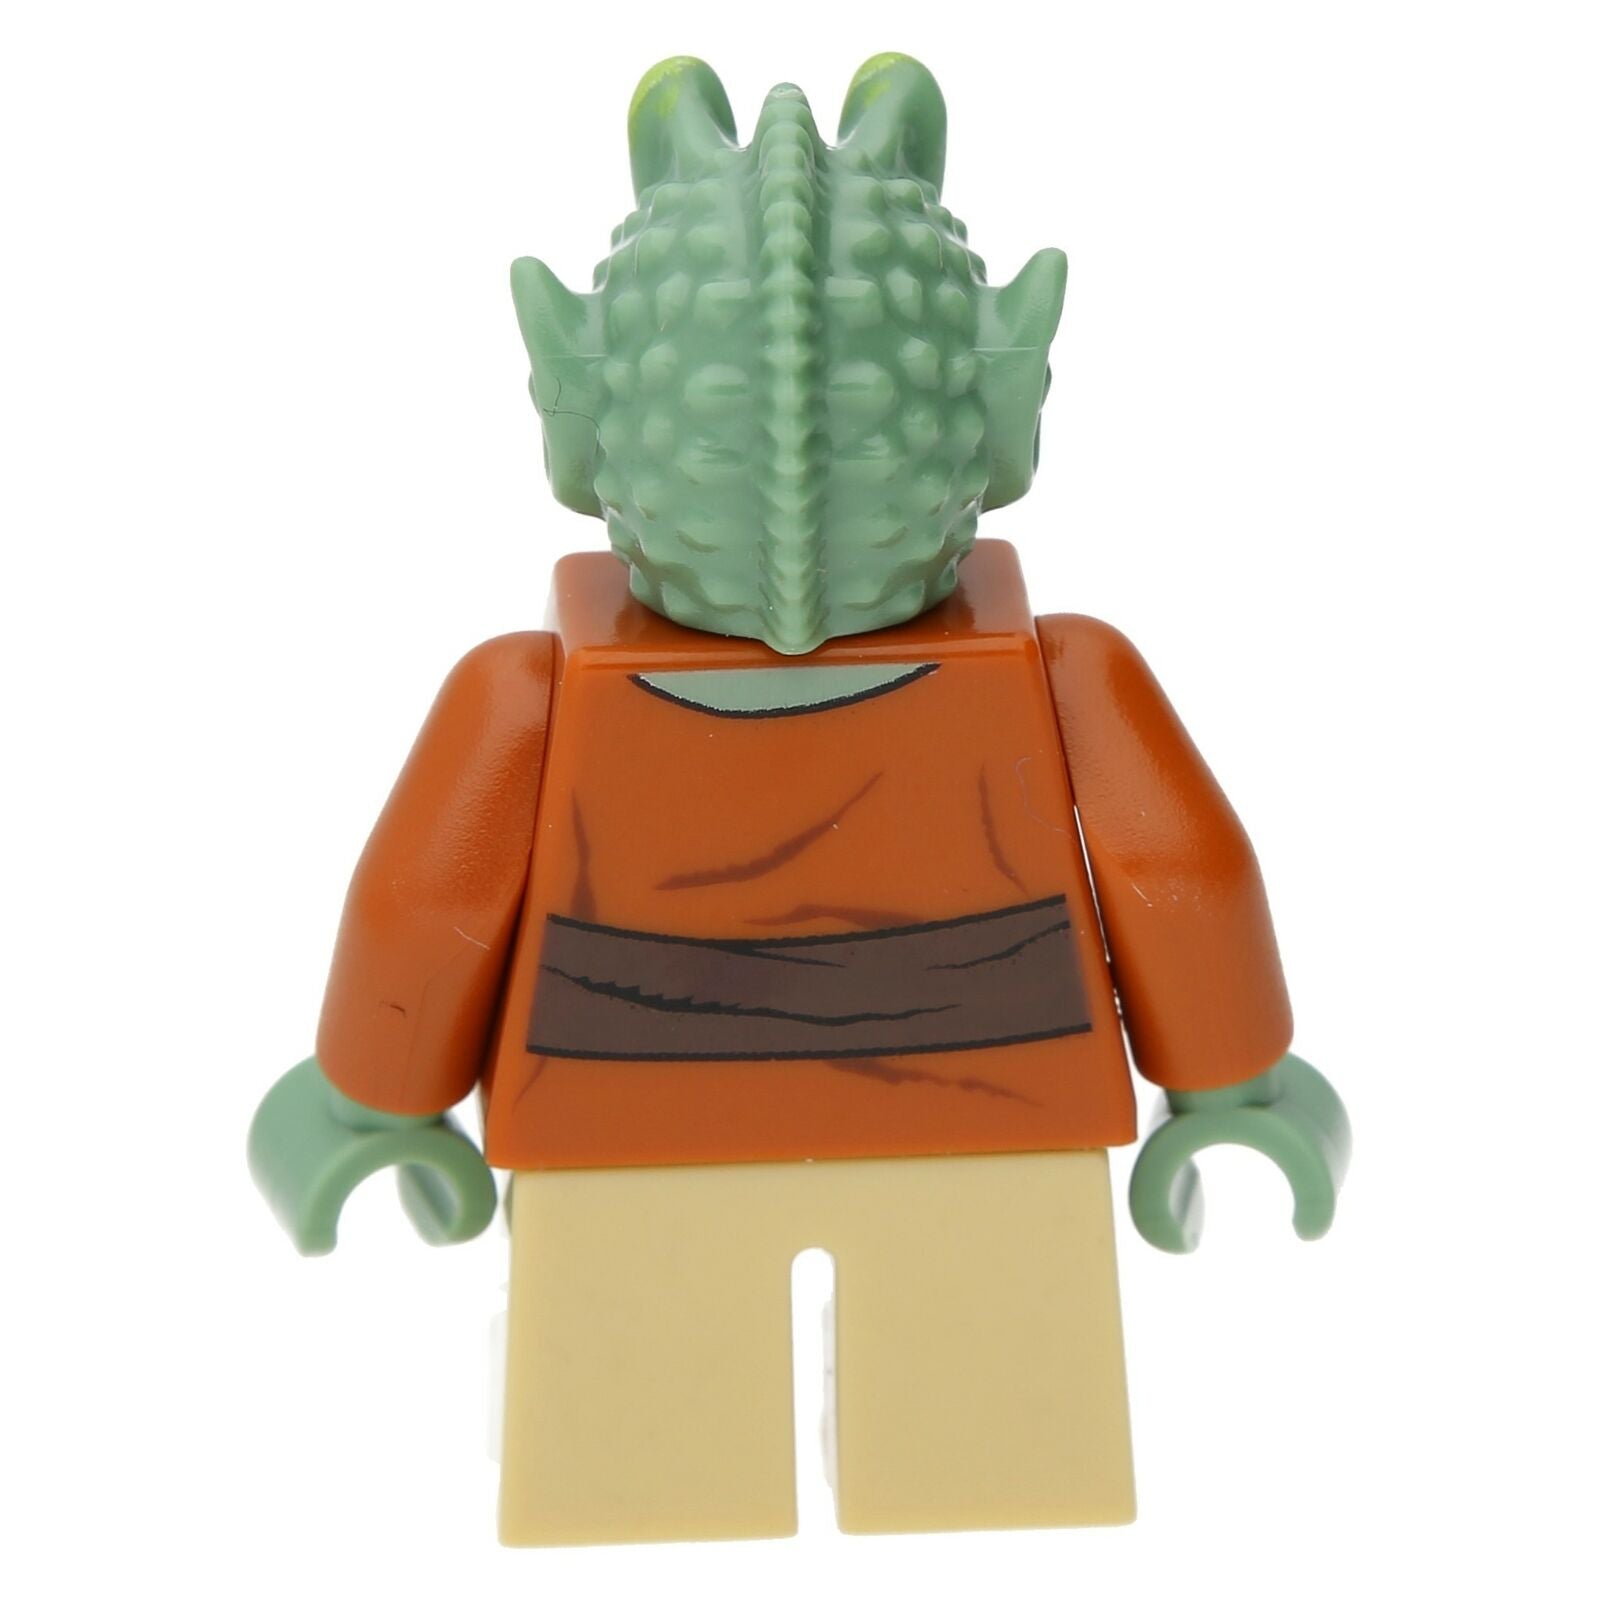 LEGO Star Wars Minifigure - Forest